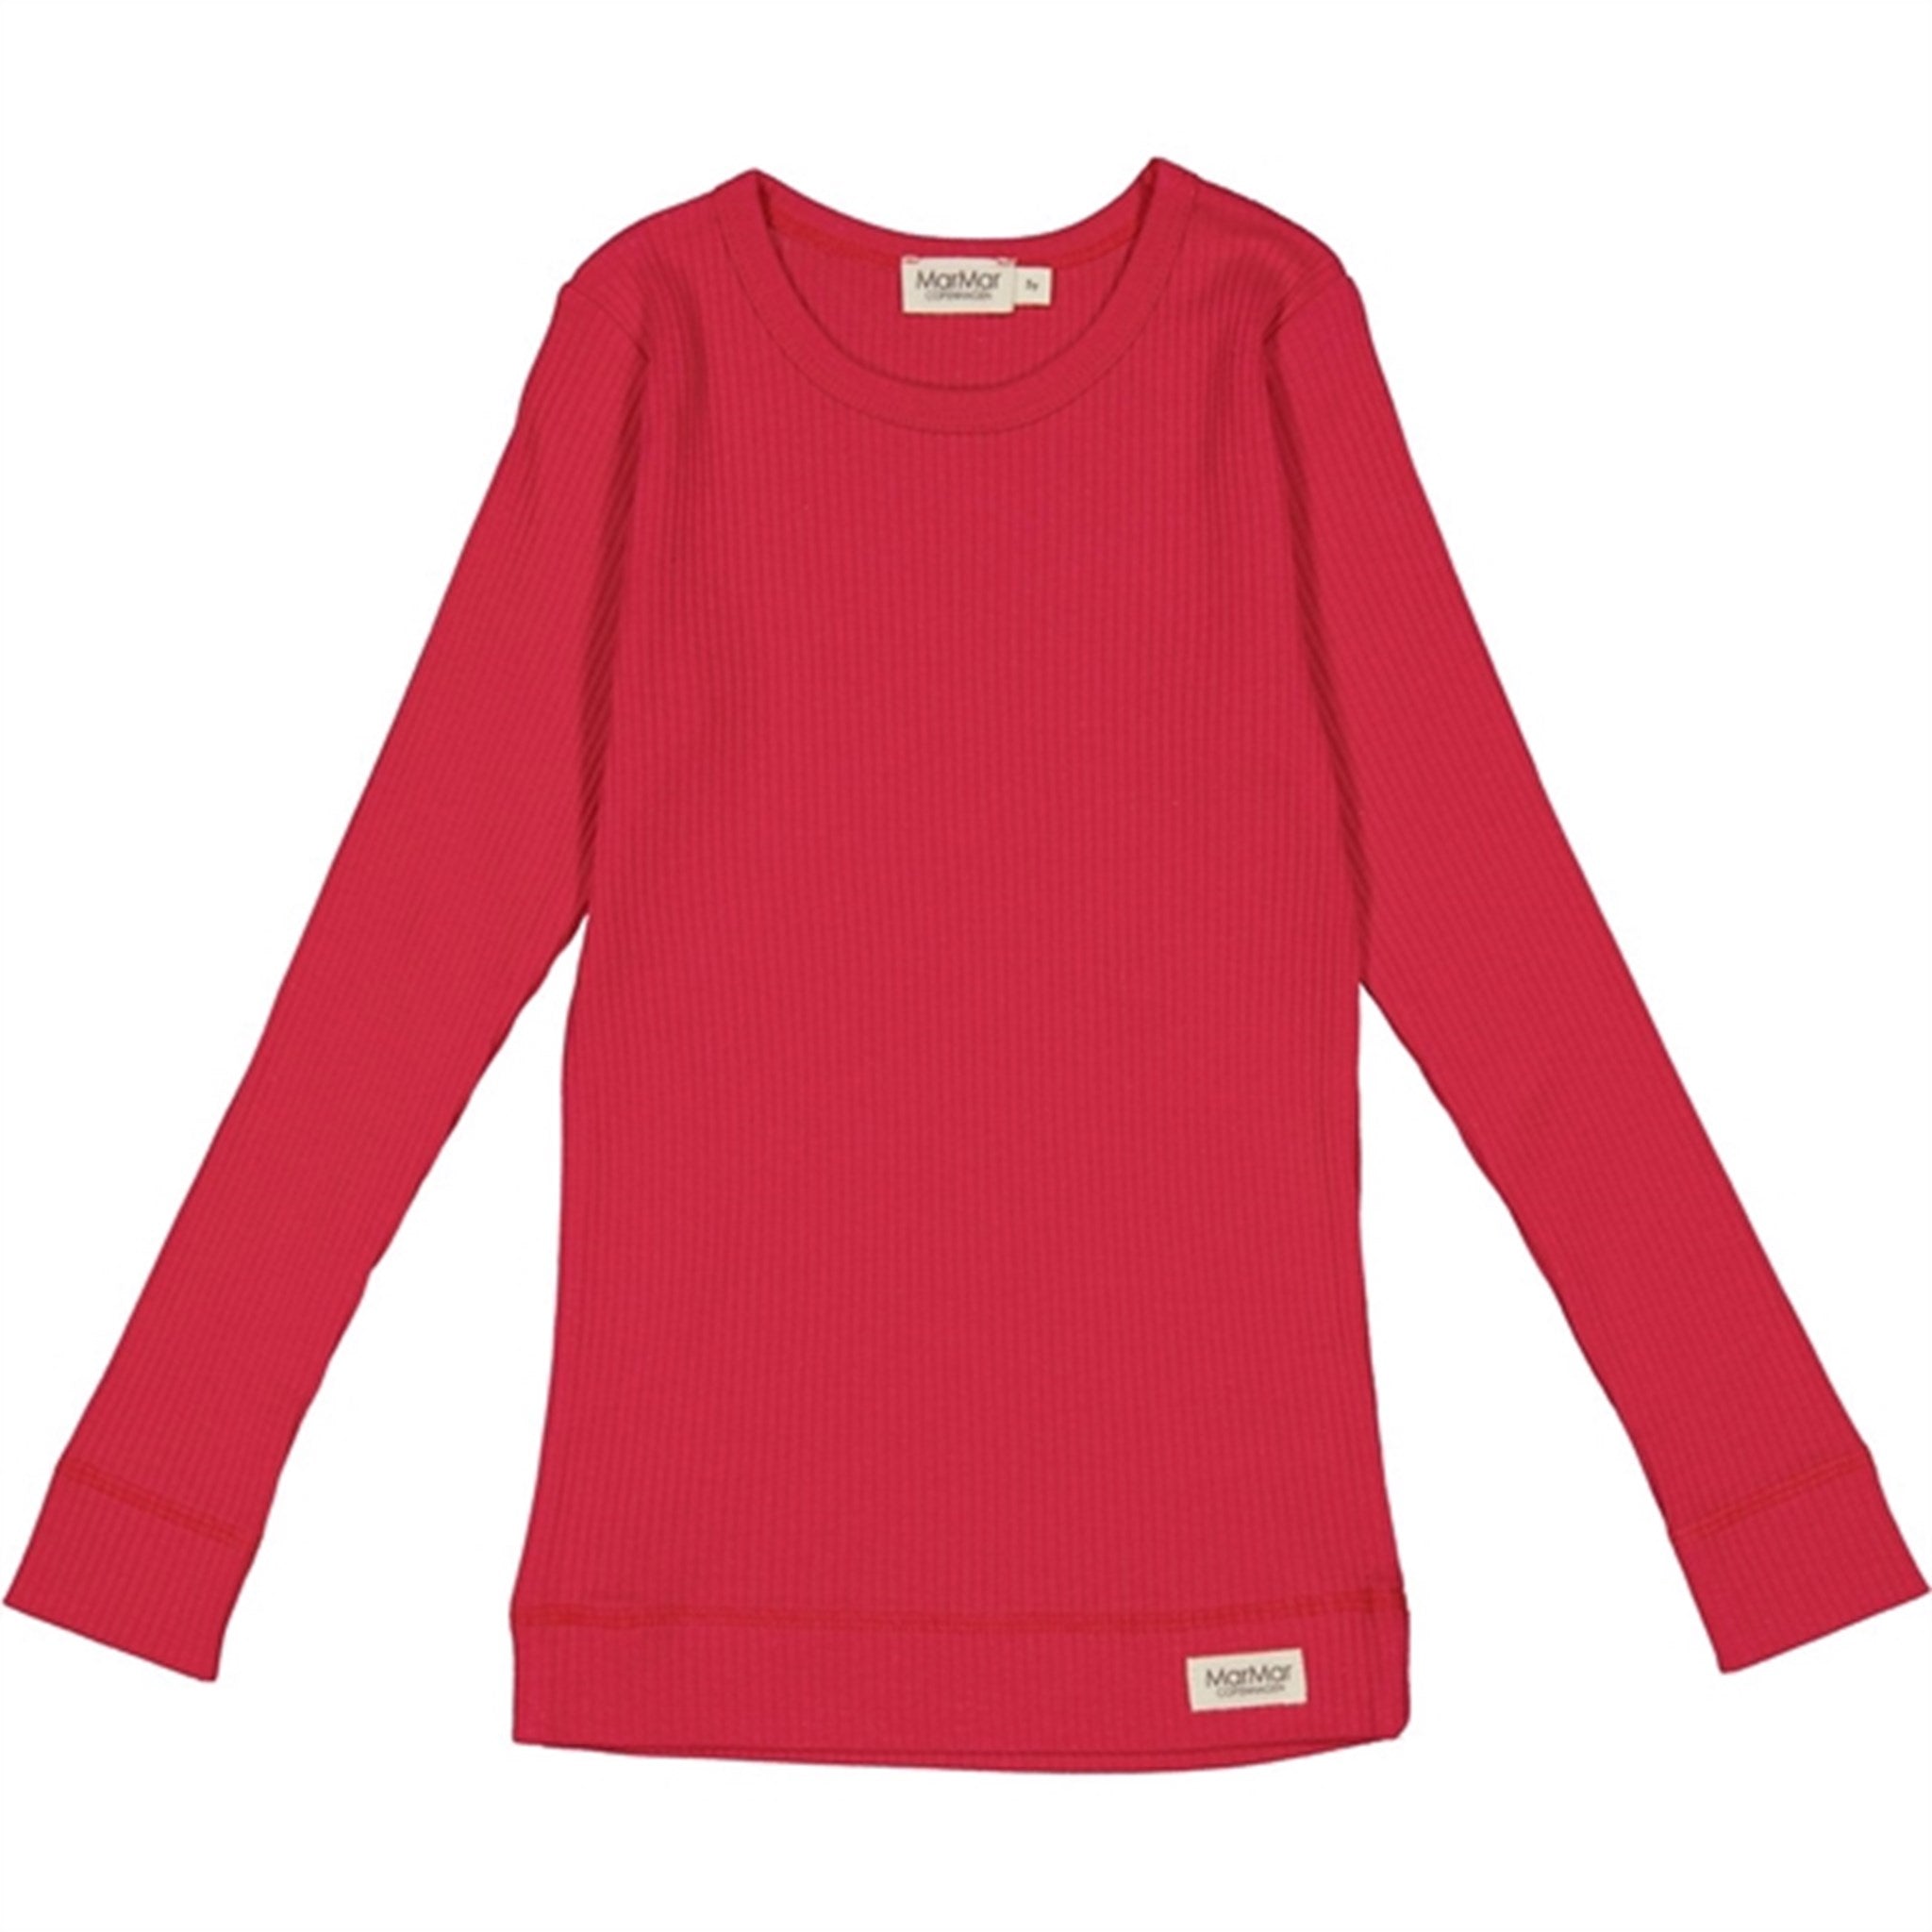 MarMar Modal Red Currant Bluse Plain 2